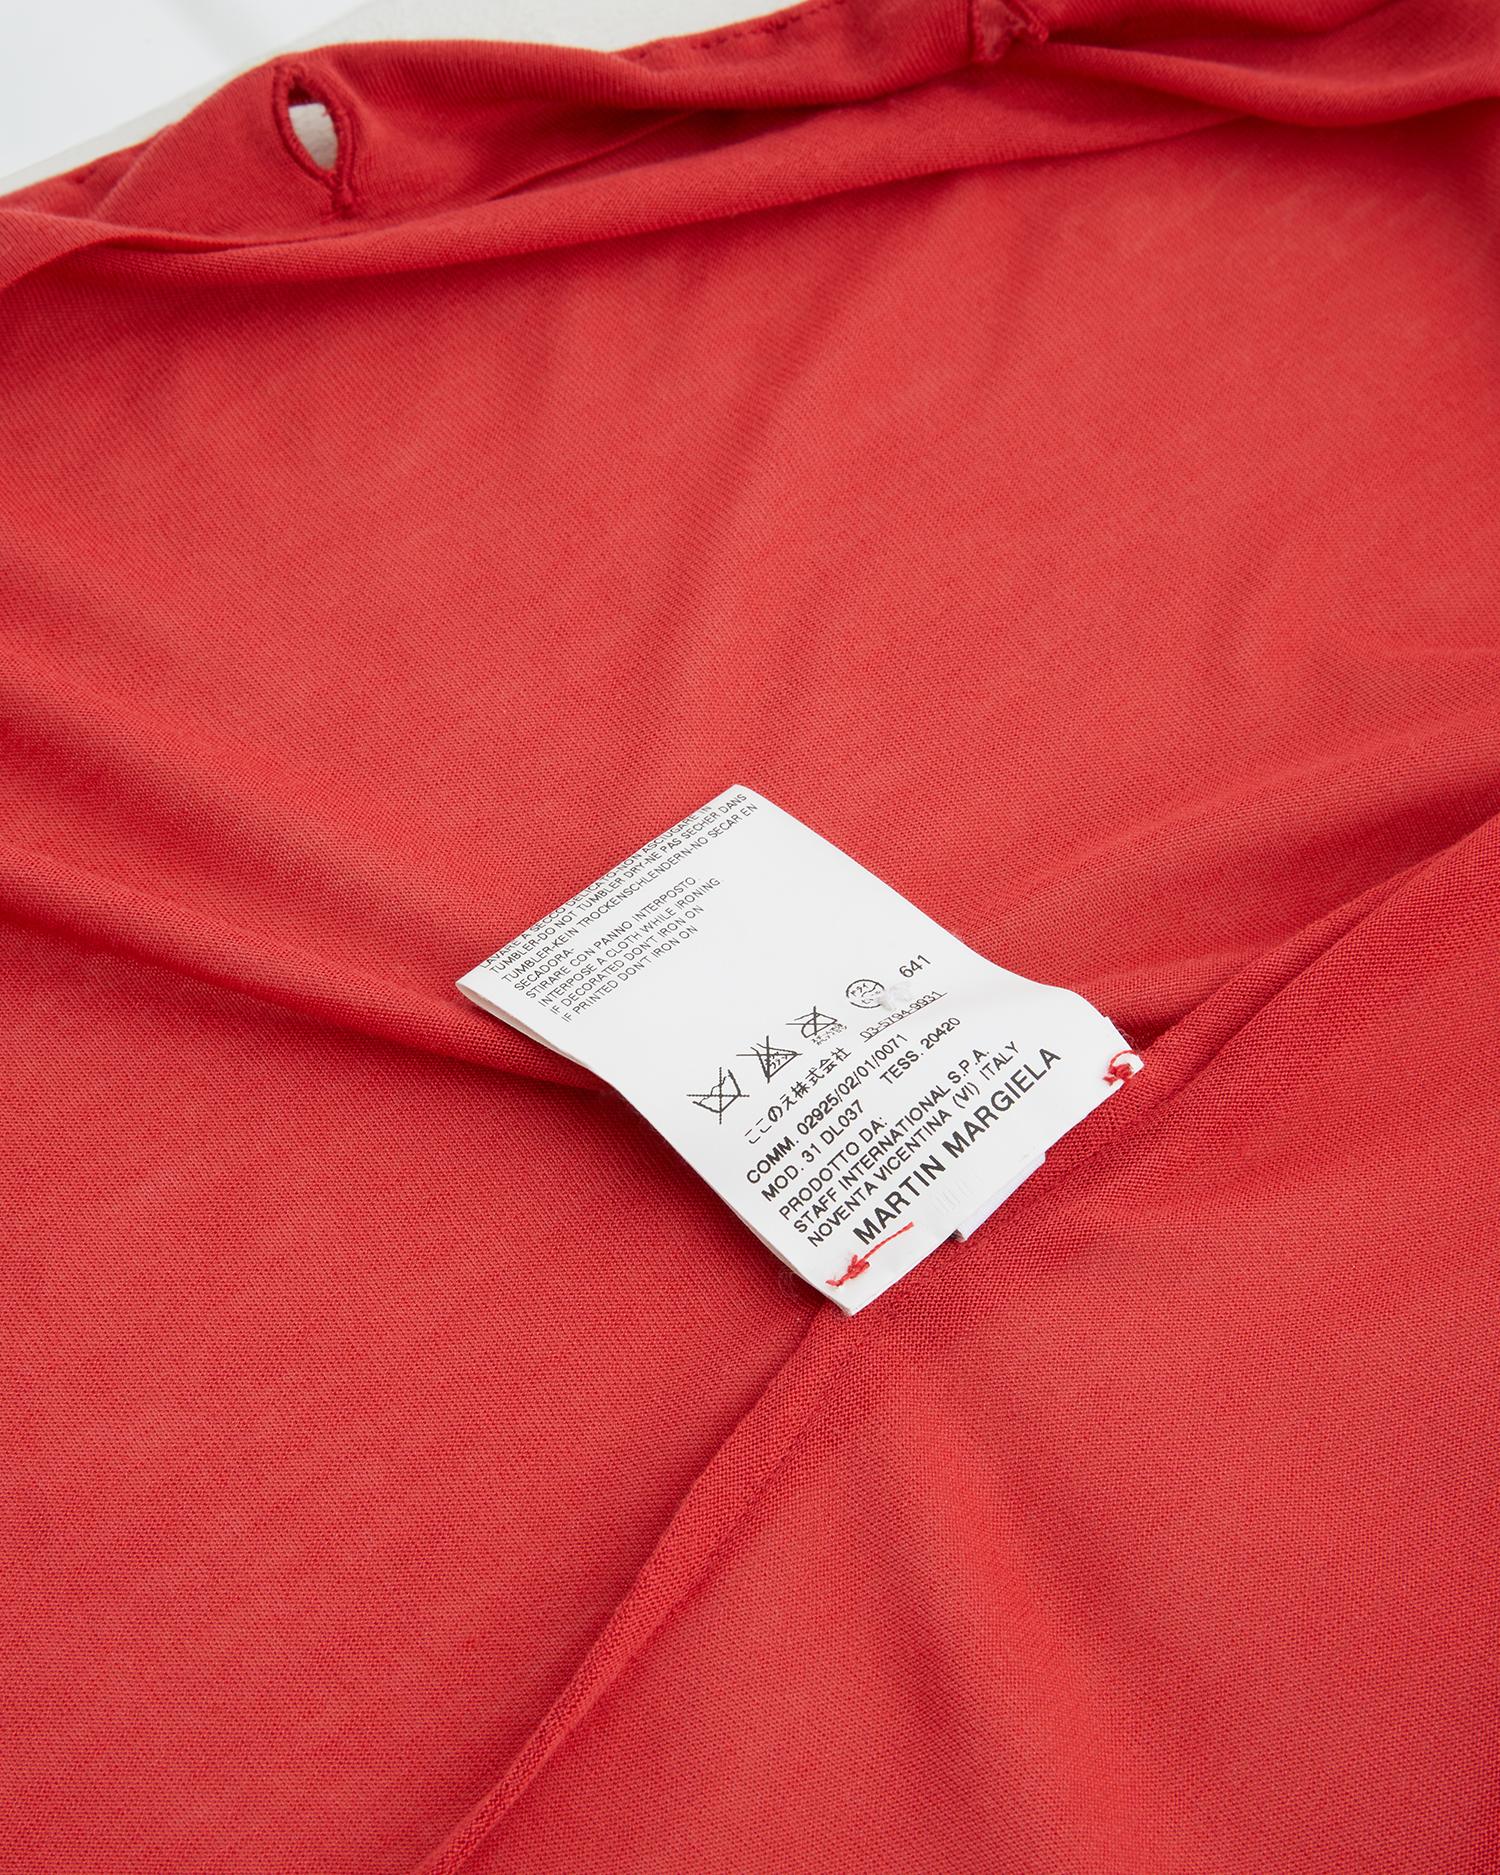 Maison Martin Margiela red viscosa shirt, ss 2001 For Sale 2